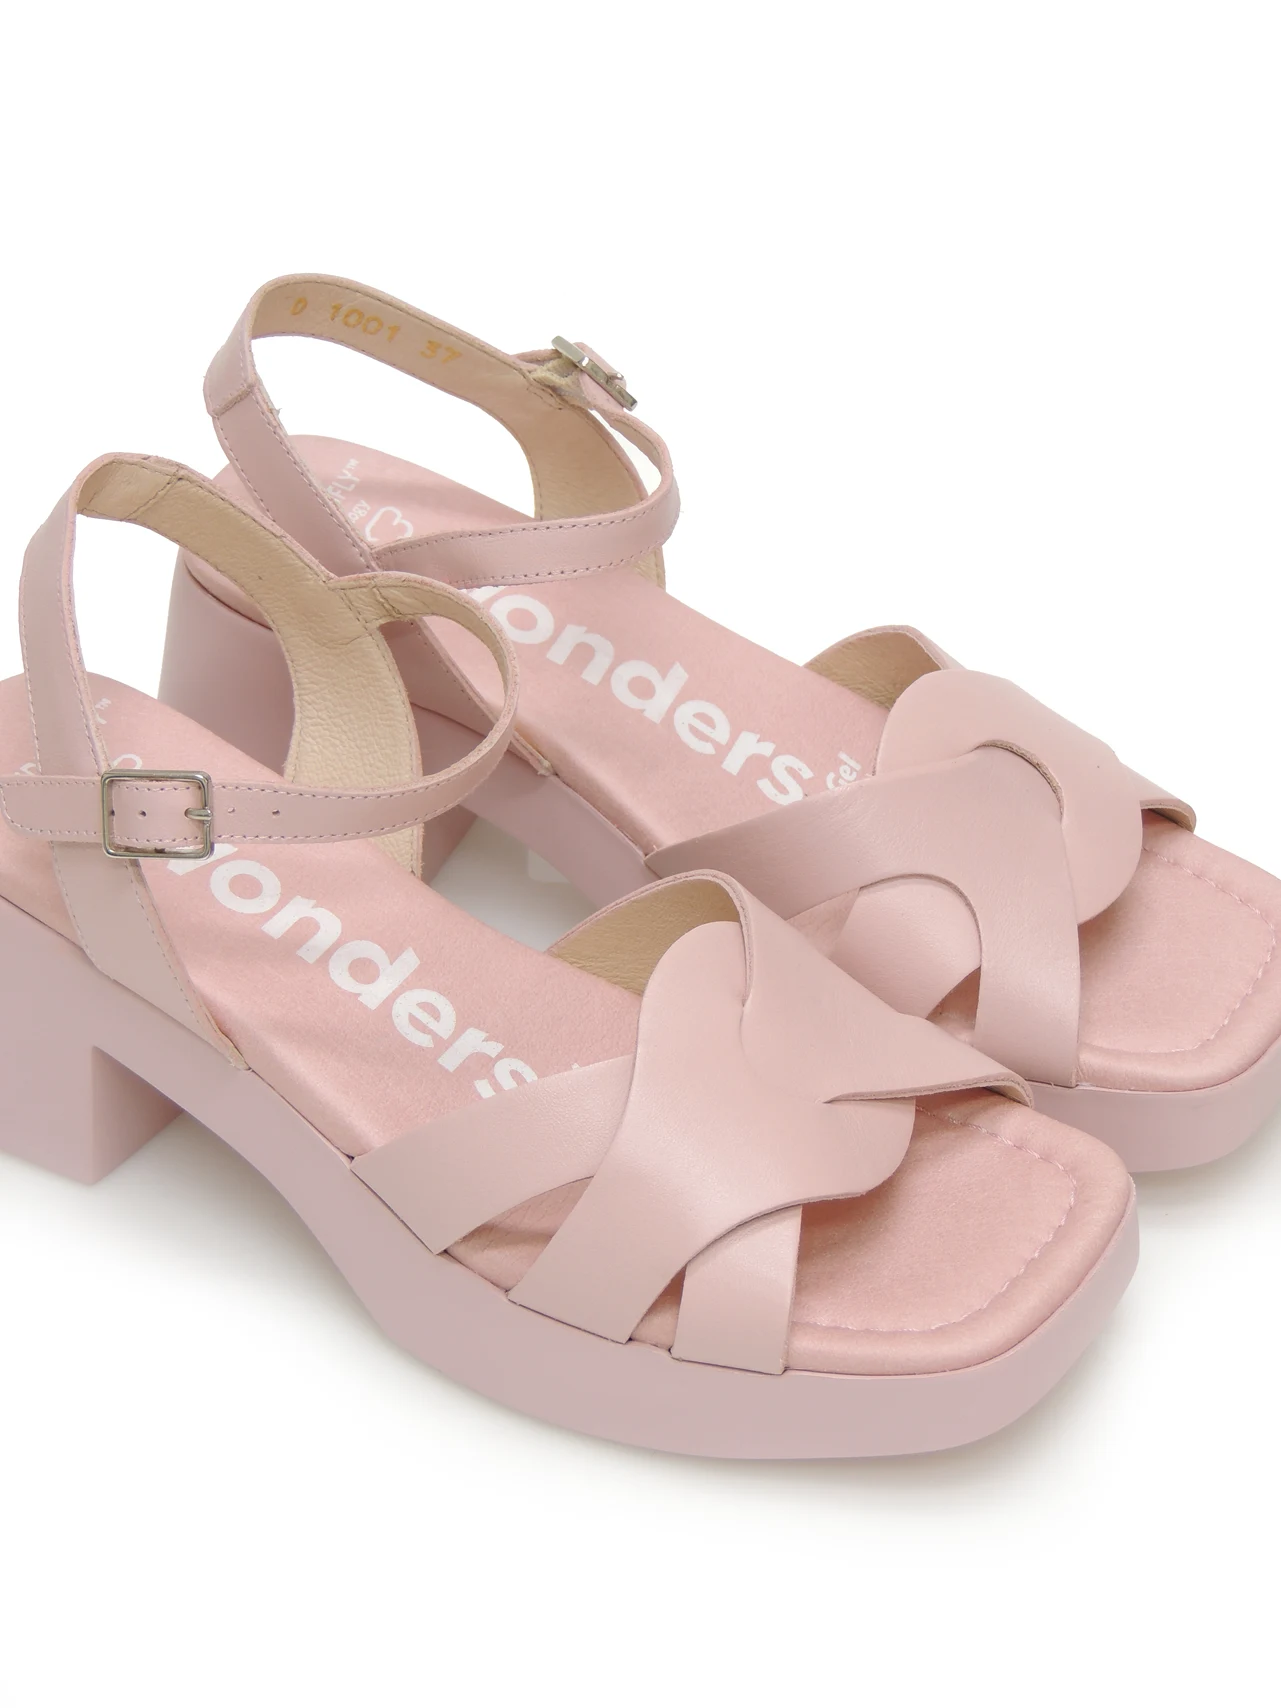 sandalias-plataforma-wonders-d-1001-piel-rosa